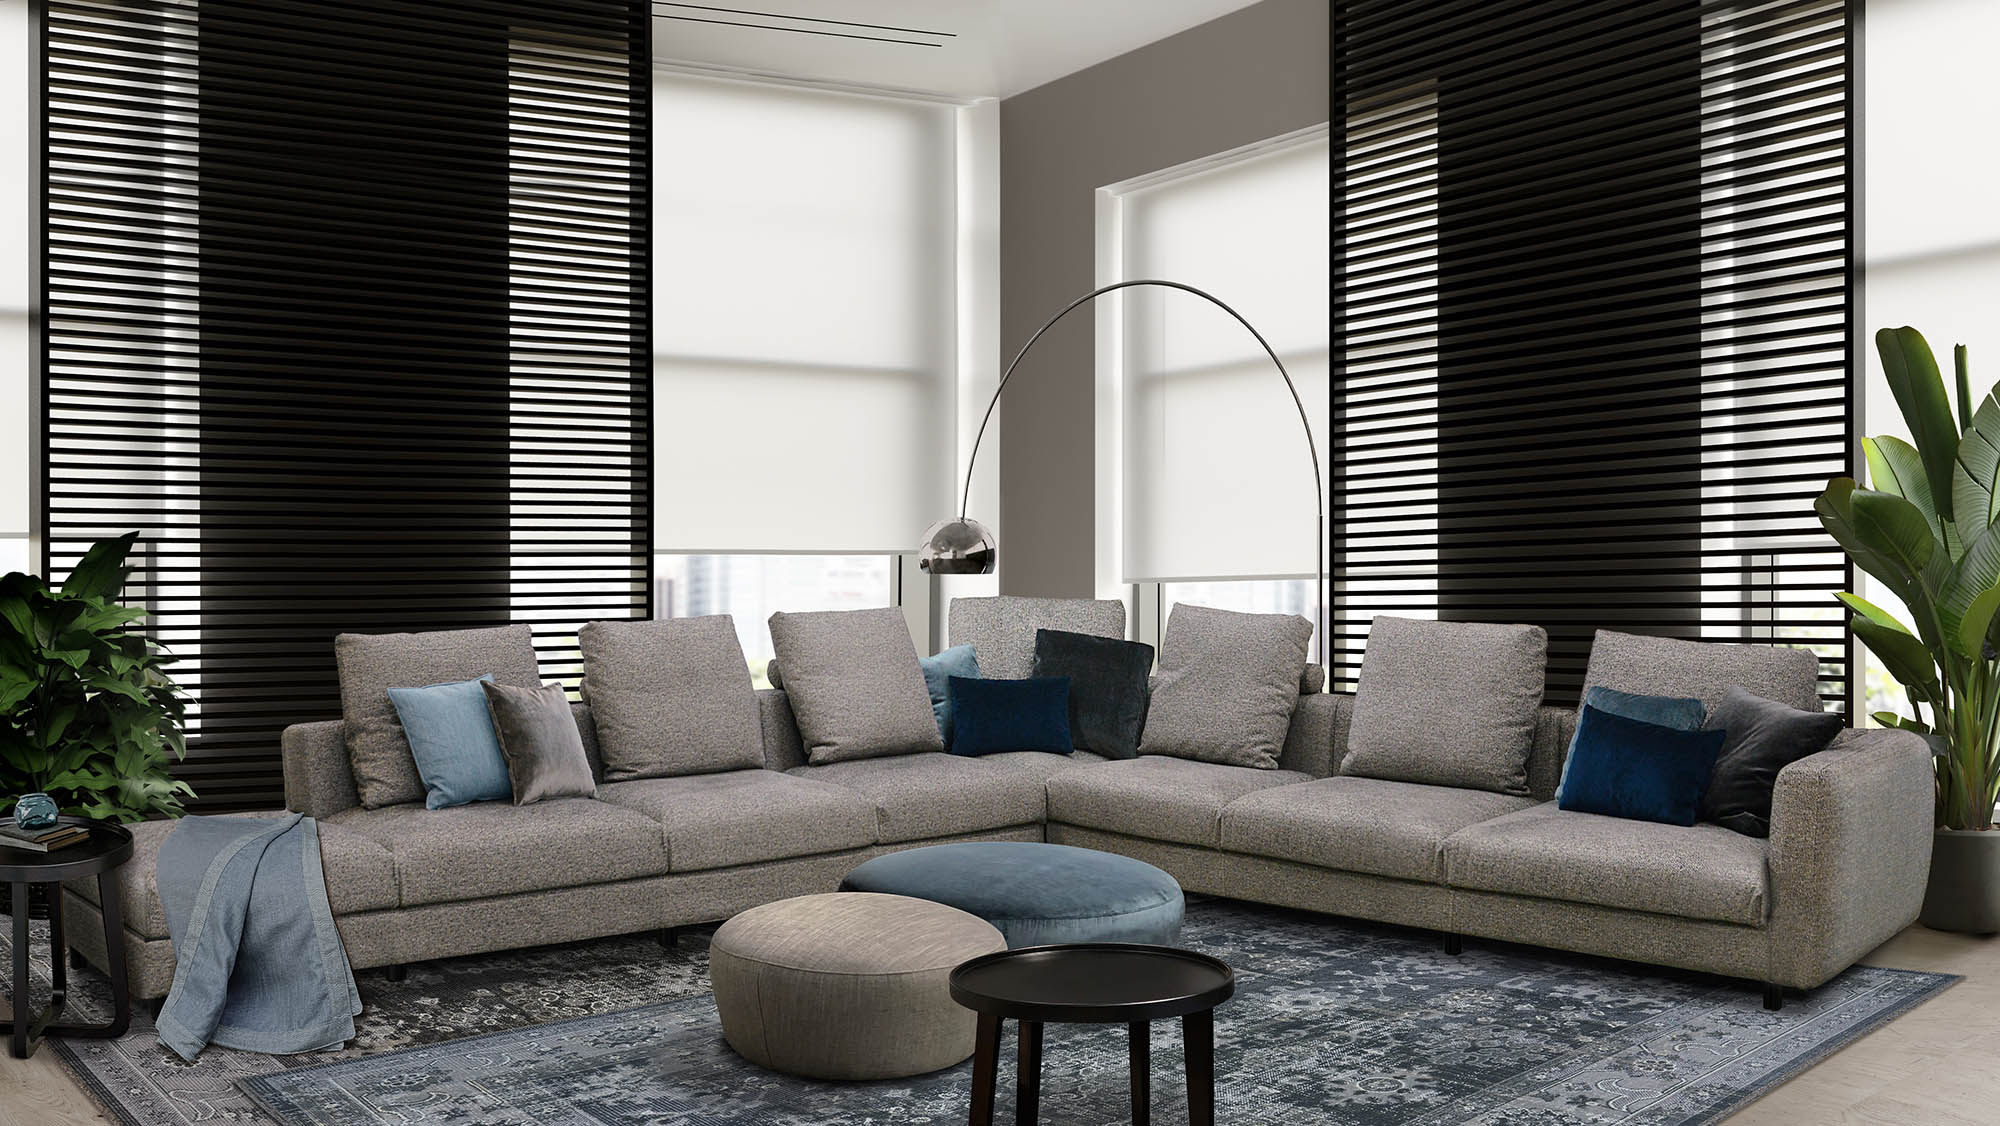 Interior of empty modern living room 3 D rendering